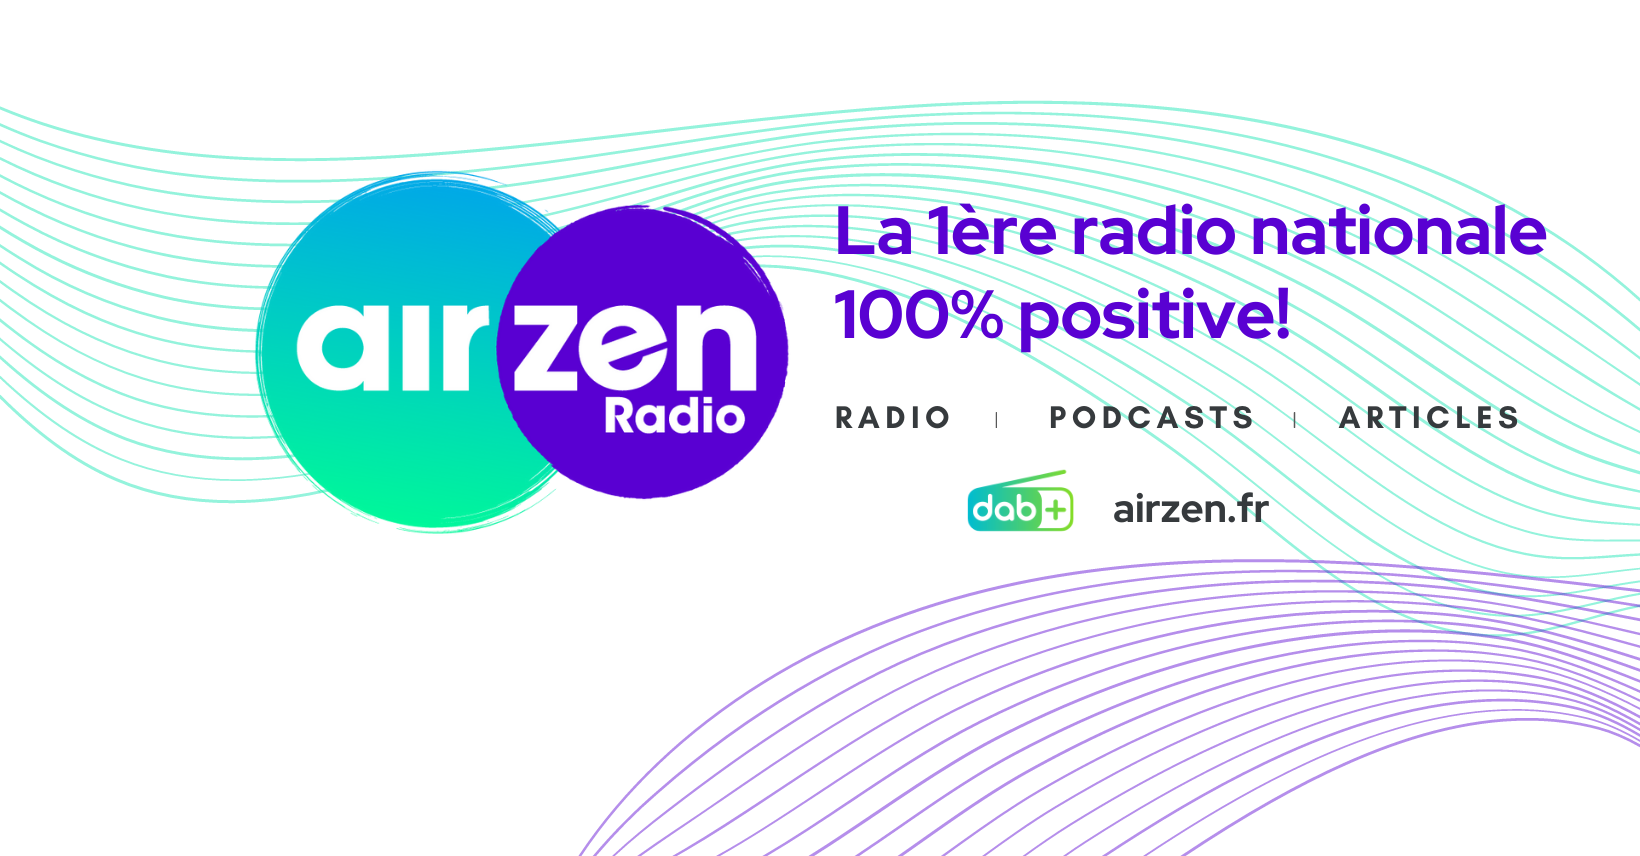 AirZen Radio diffusée en DAB+ à Barcelone